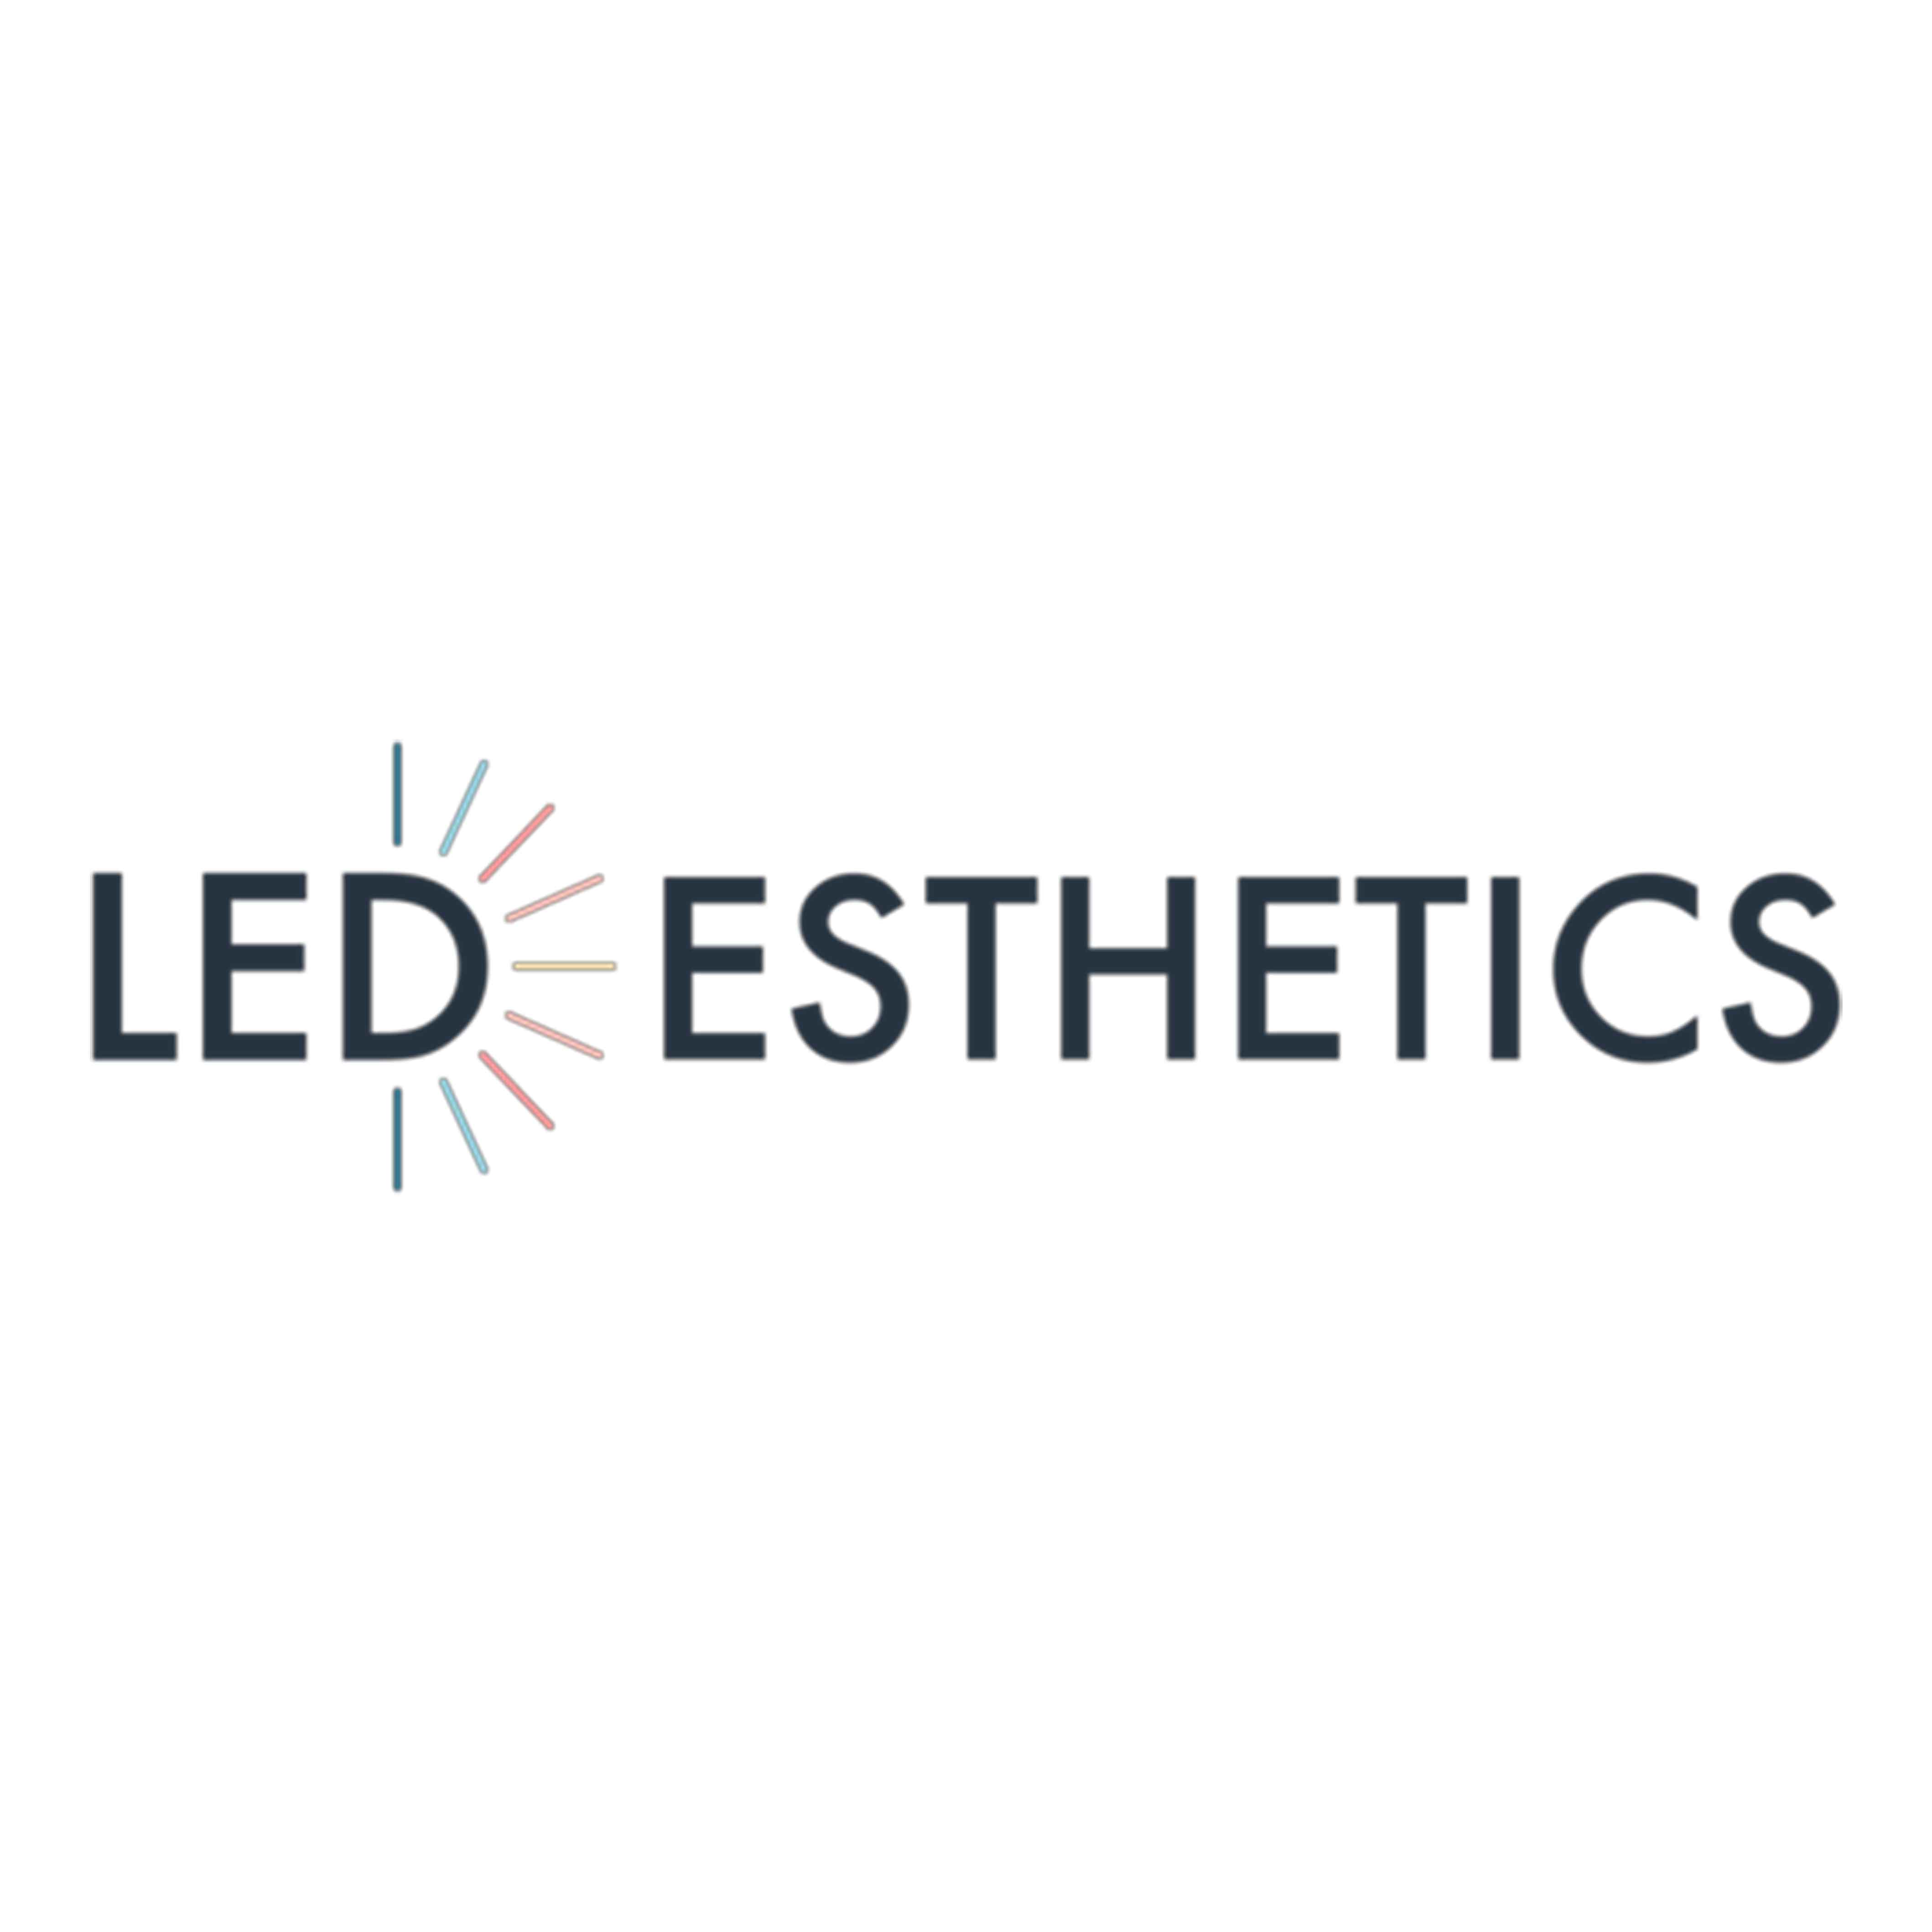 LED Esthetics logo